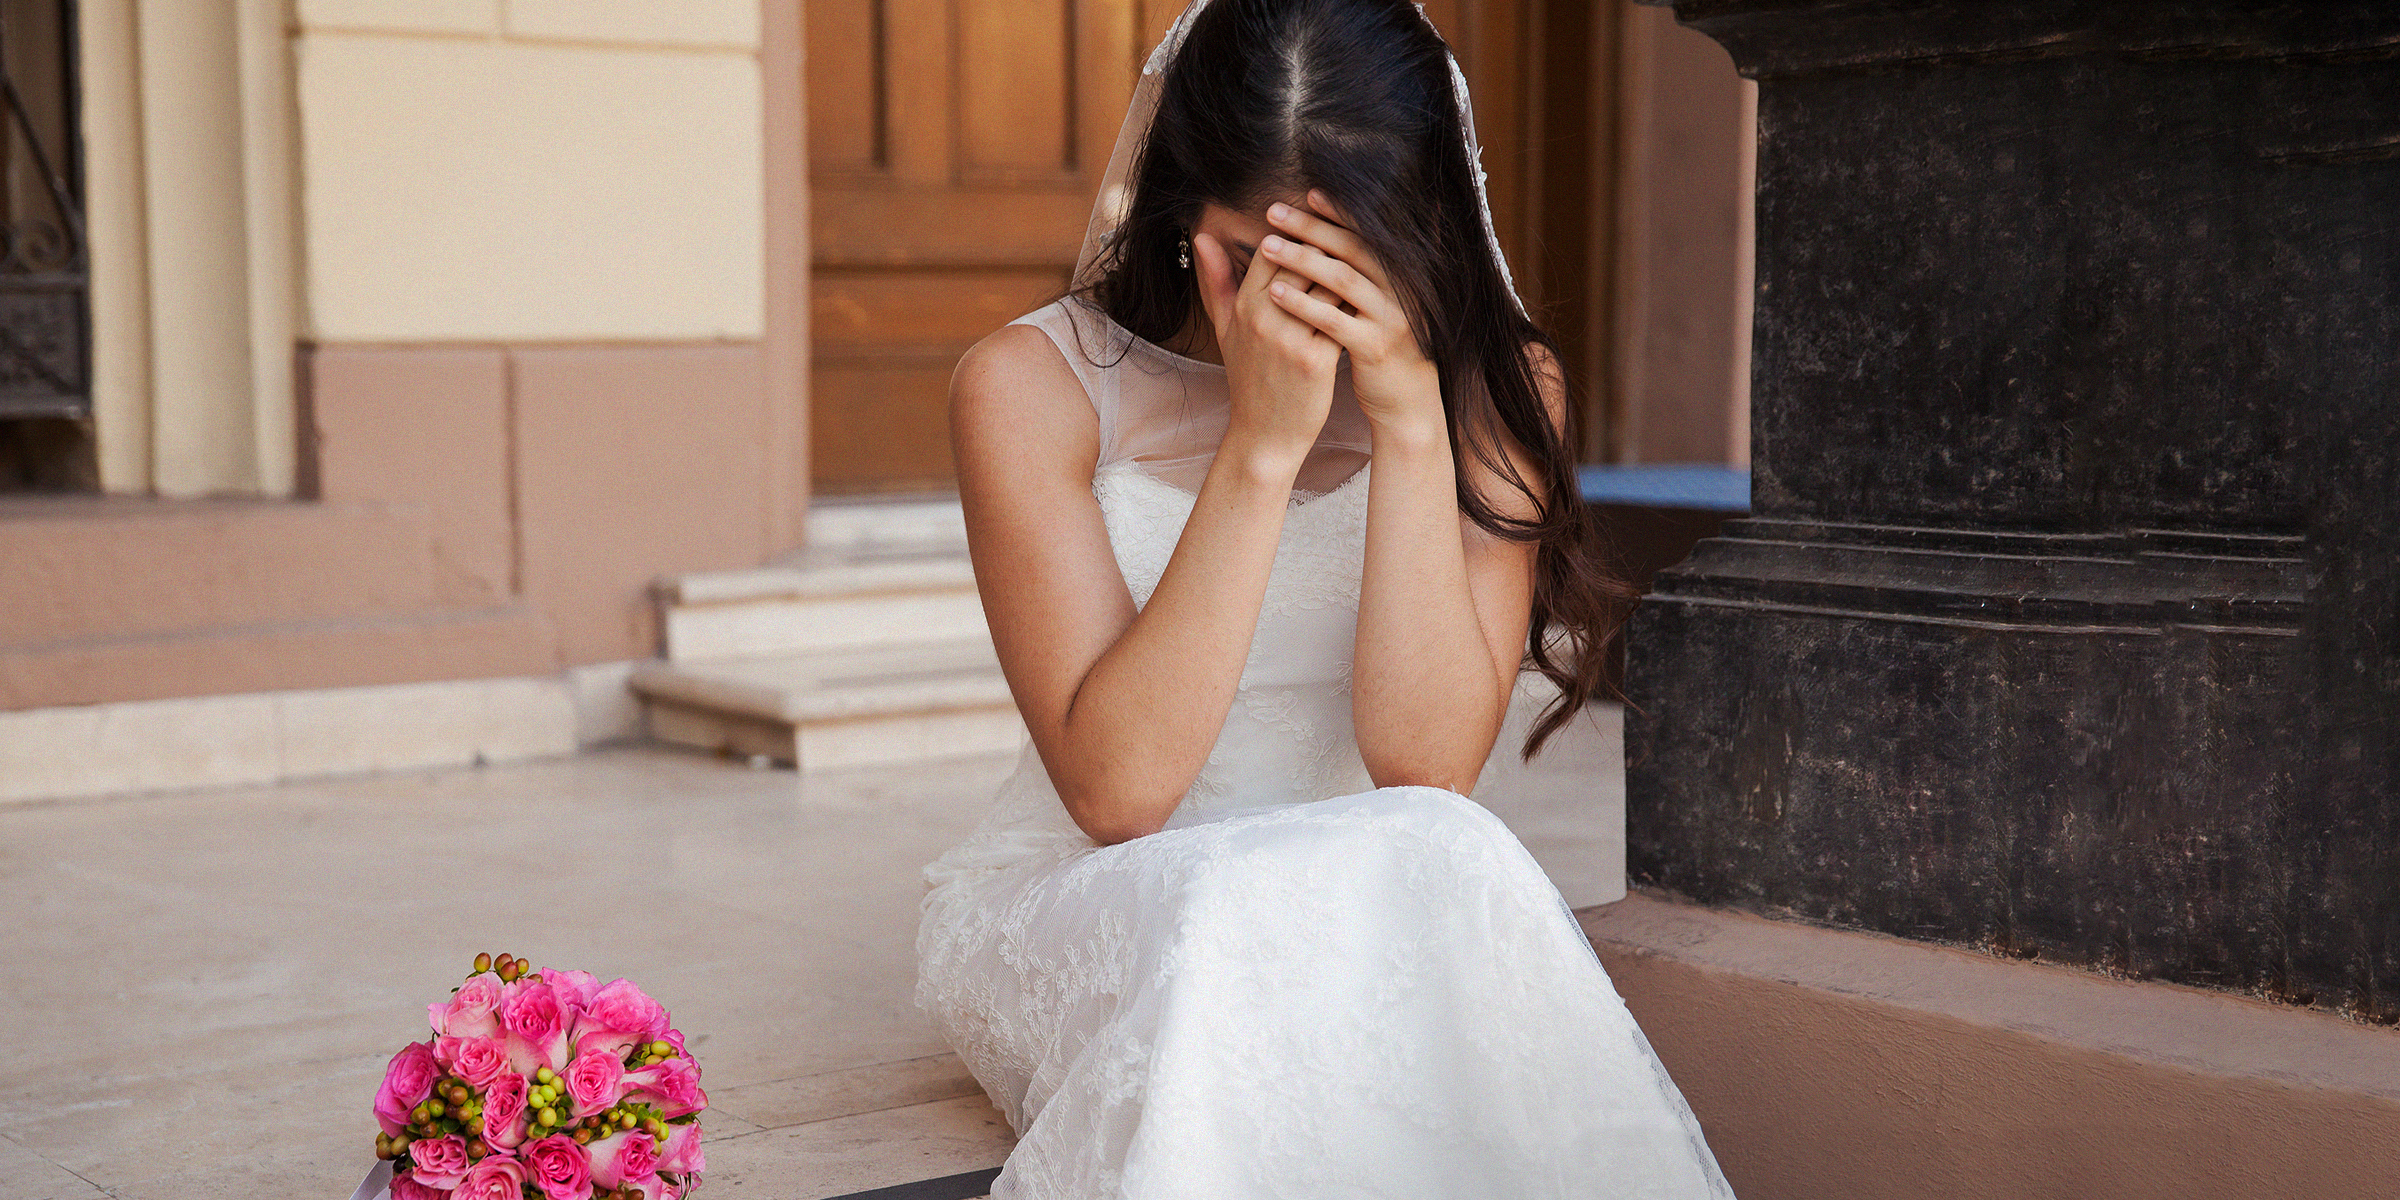 Une mariée bouleversée | Source : Midjourney